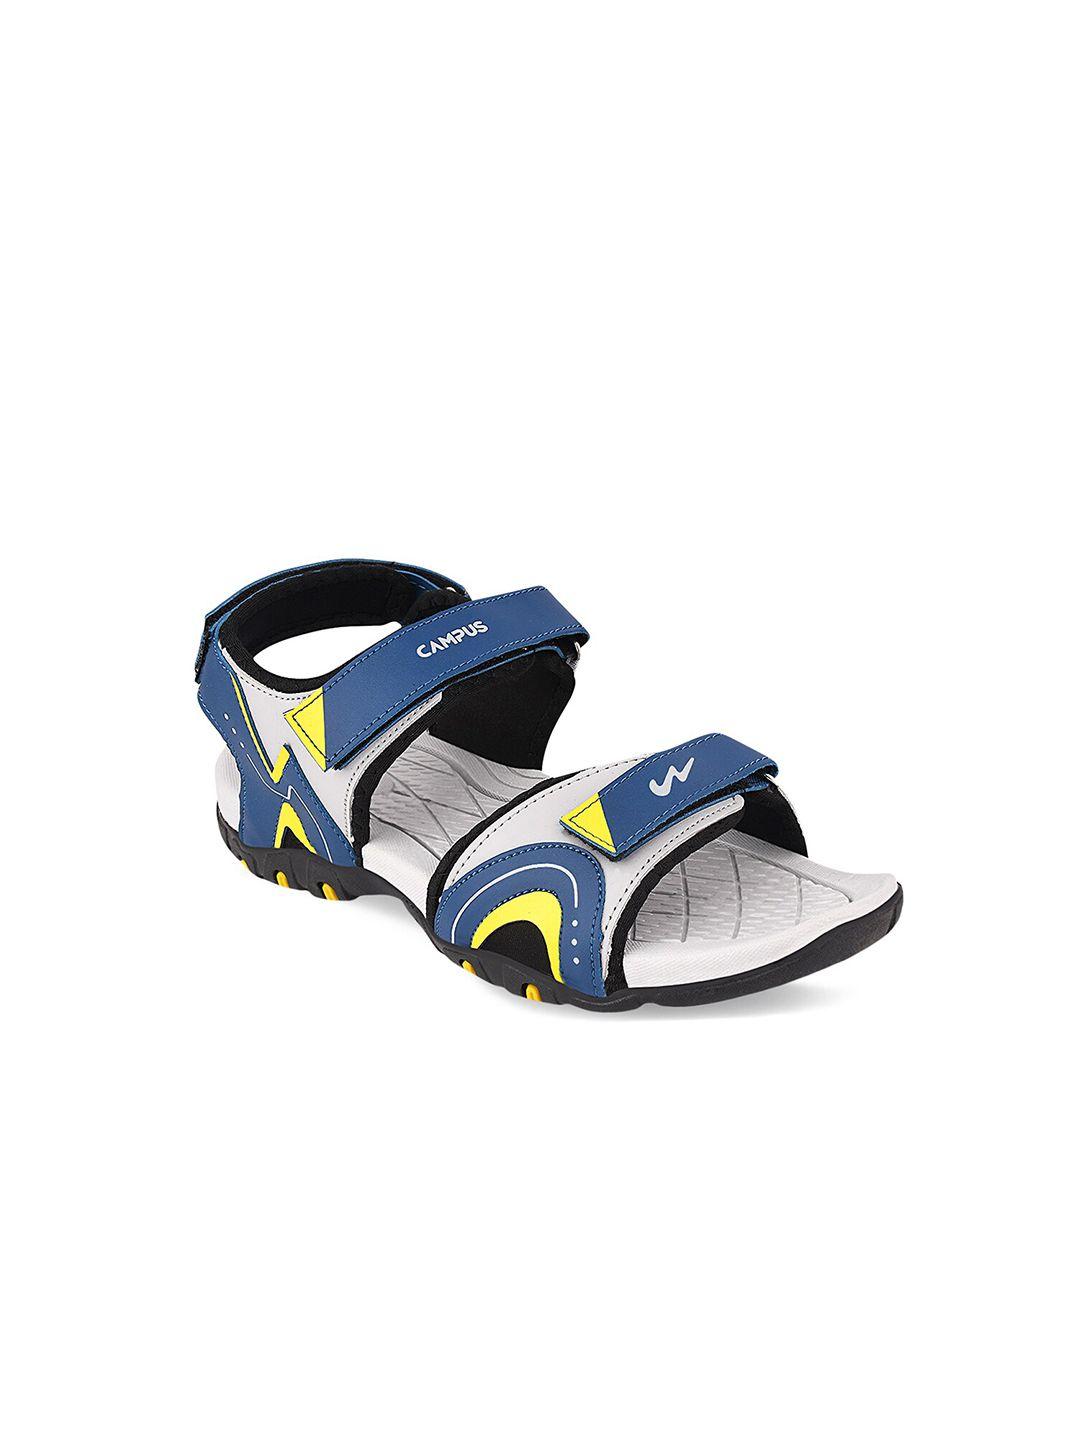 campus-men-blue-&-yellow-comfort-sandals